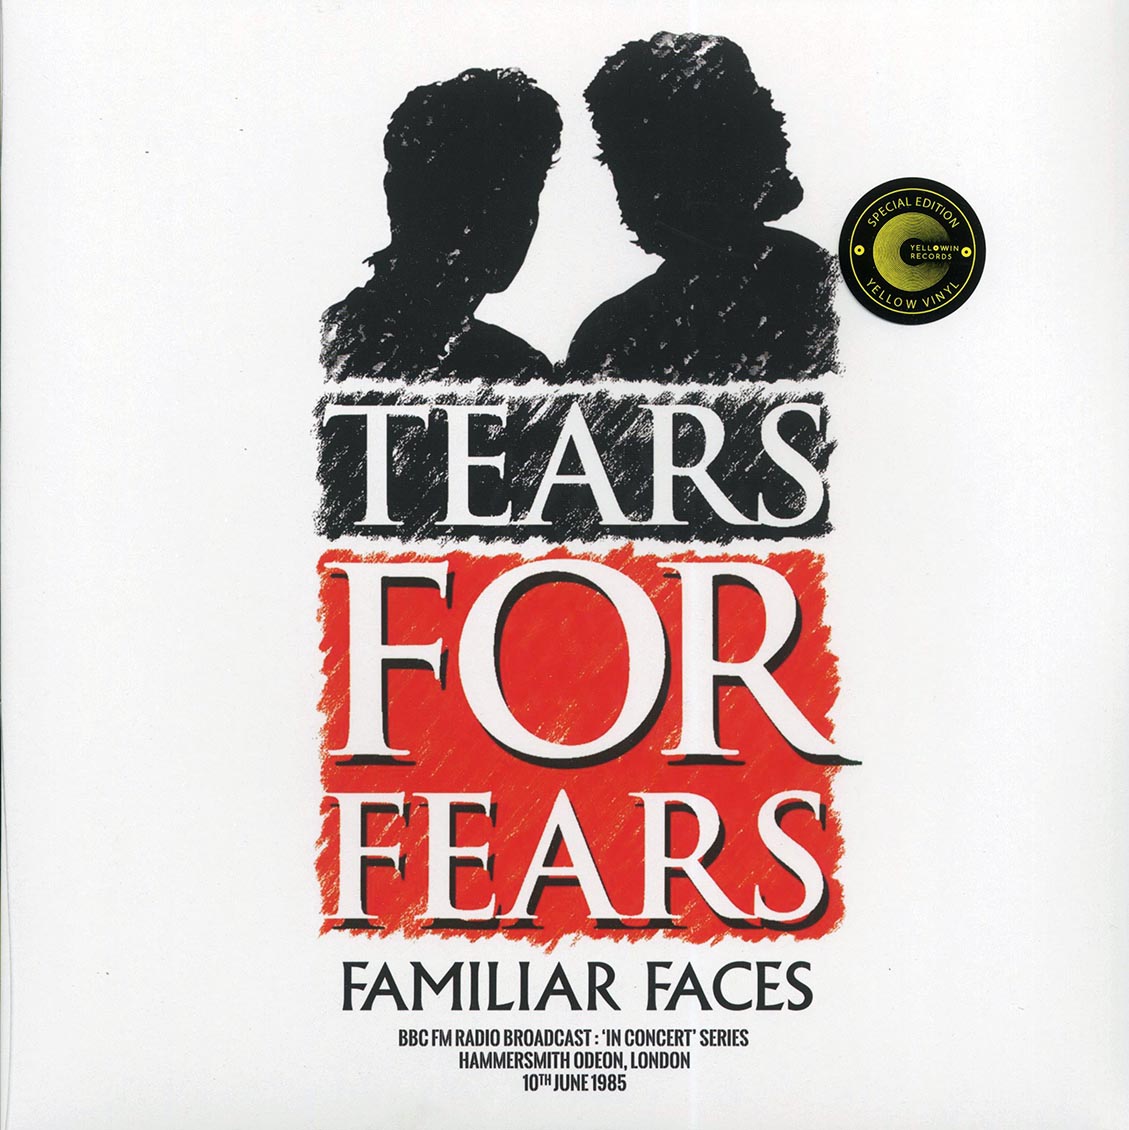 Tears For Fears - Familiar Faces: BBC FM In Concert Series, Hammersmith Odeon, London 10th June 1985 (ltd. ed.) (yellow vinyl) - Vinyl LP